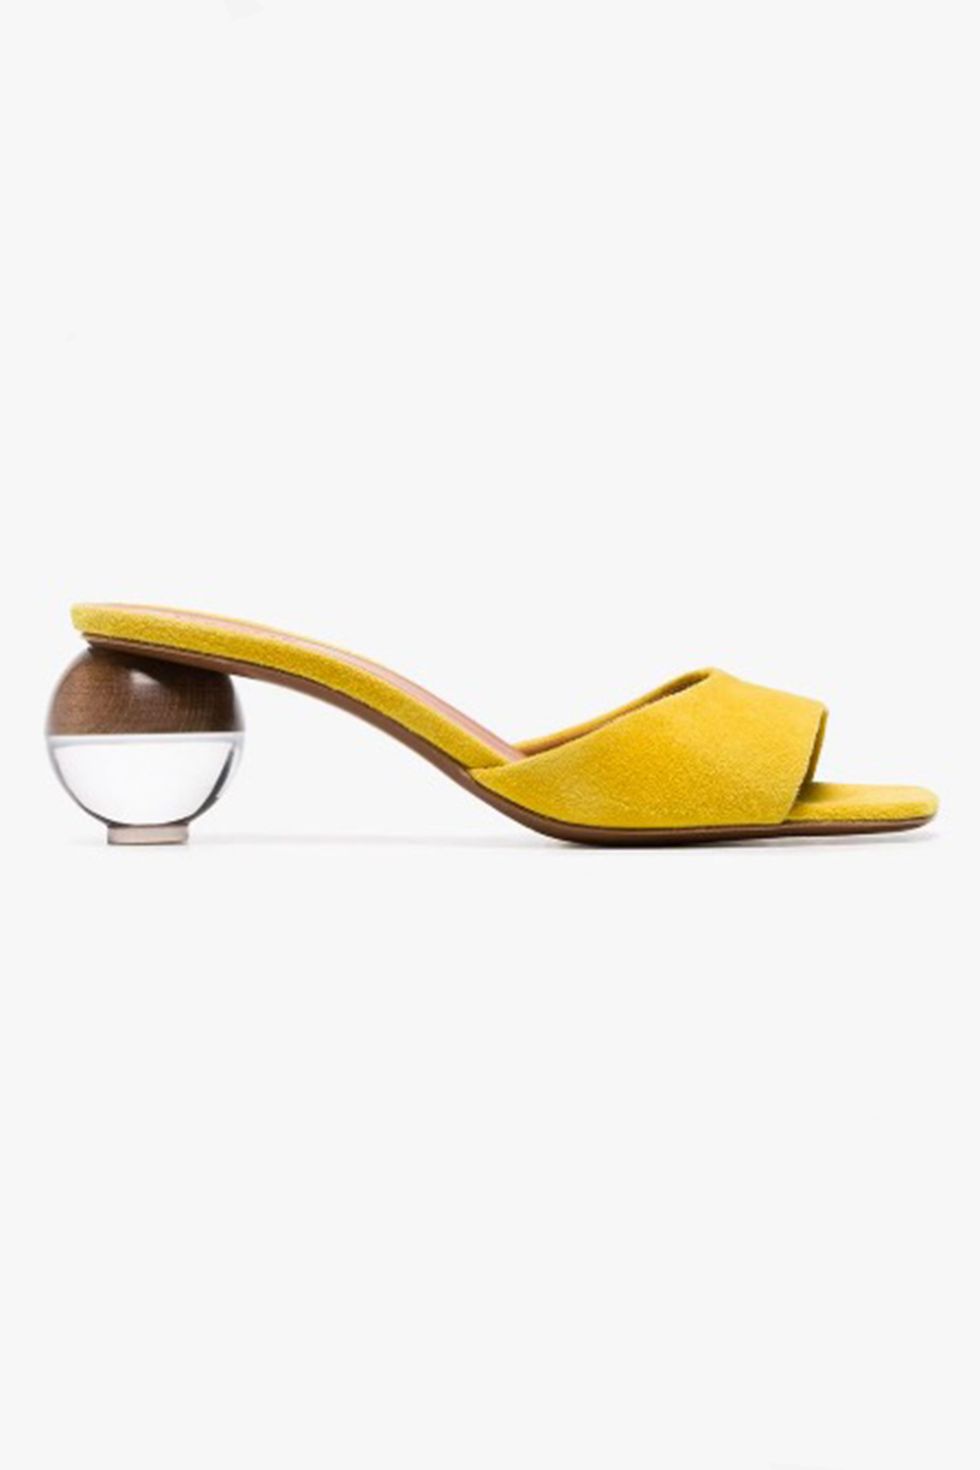 Neous shoe, sculptural heels